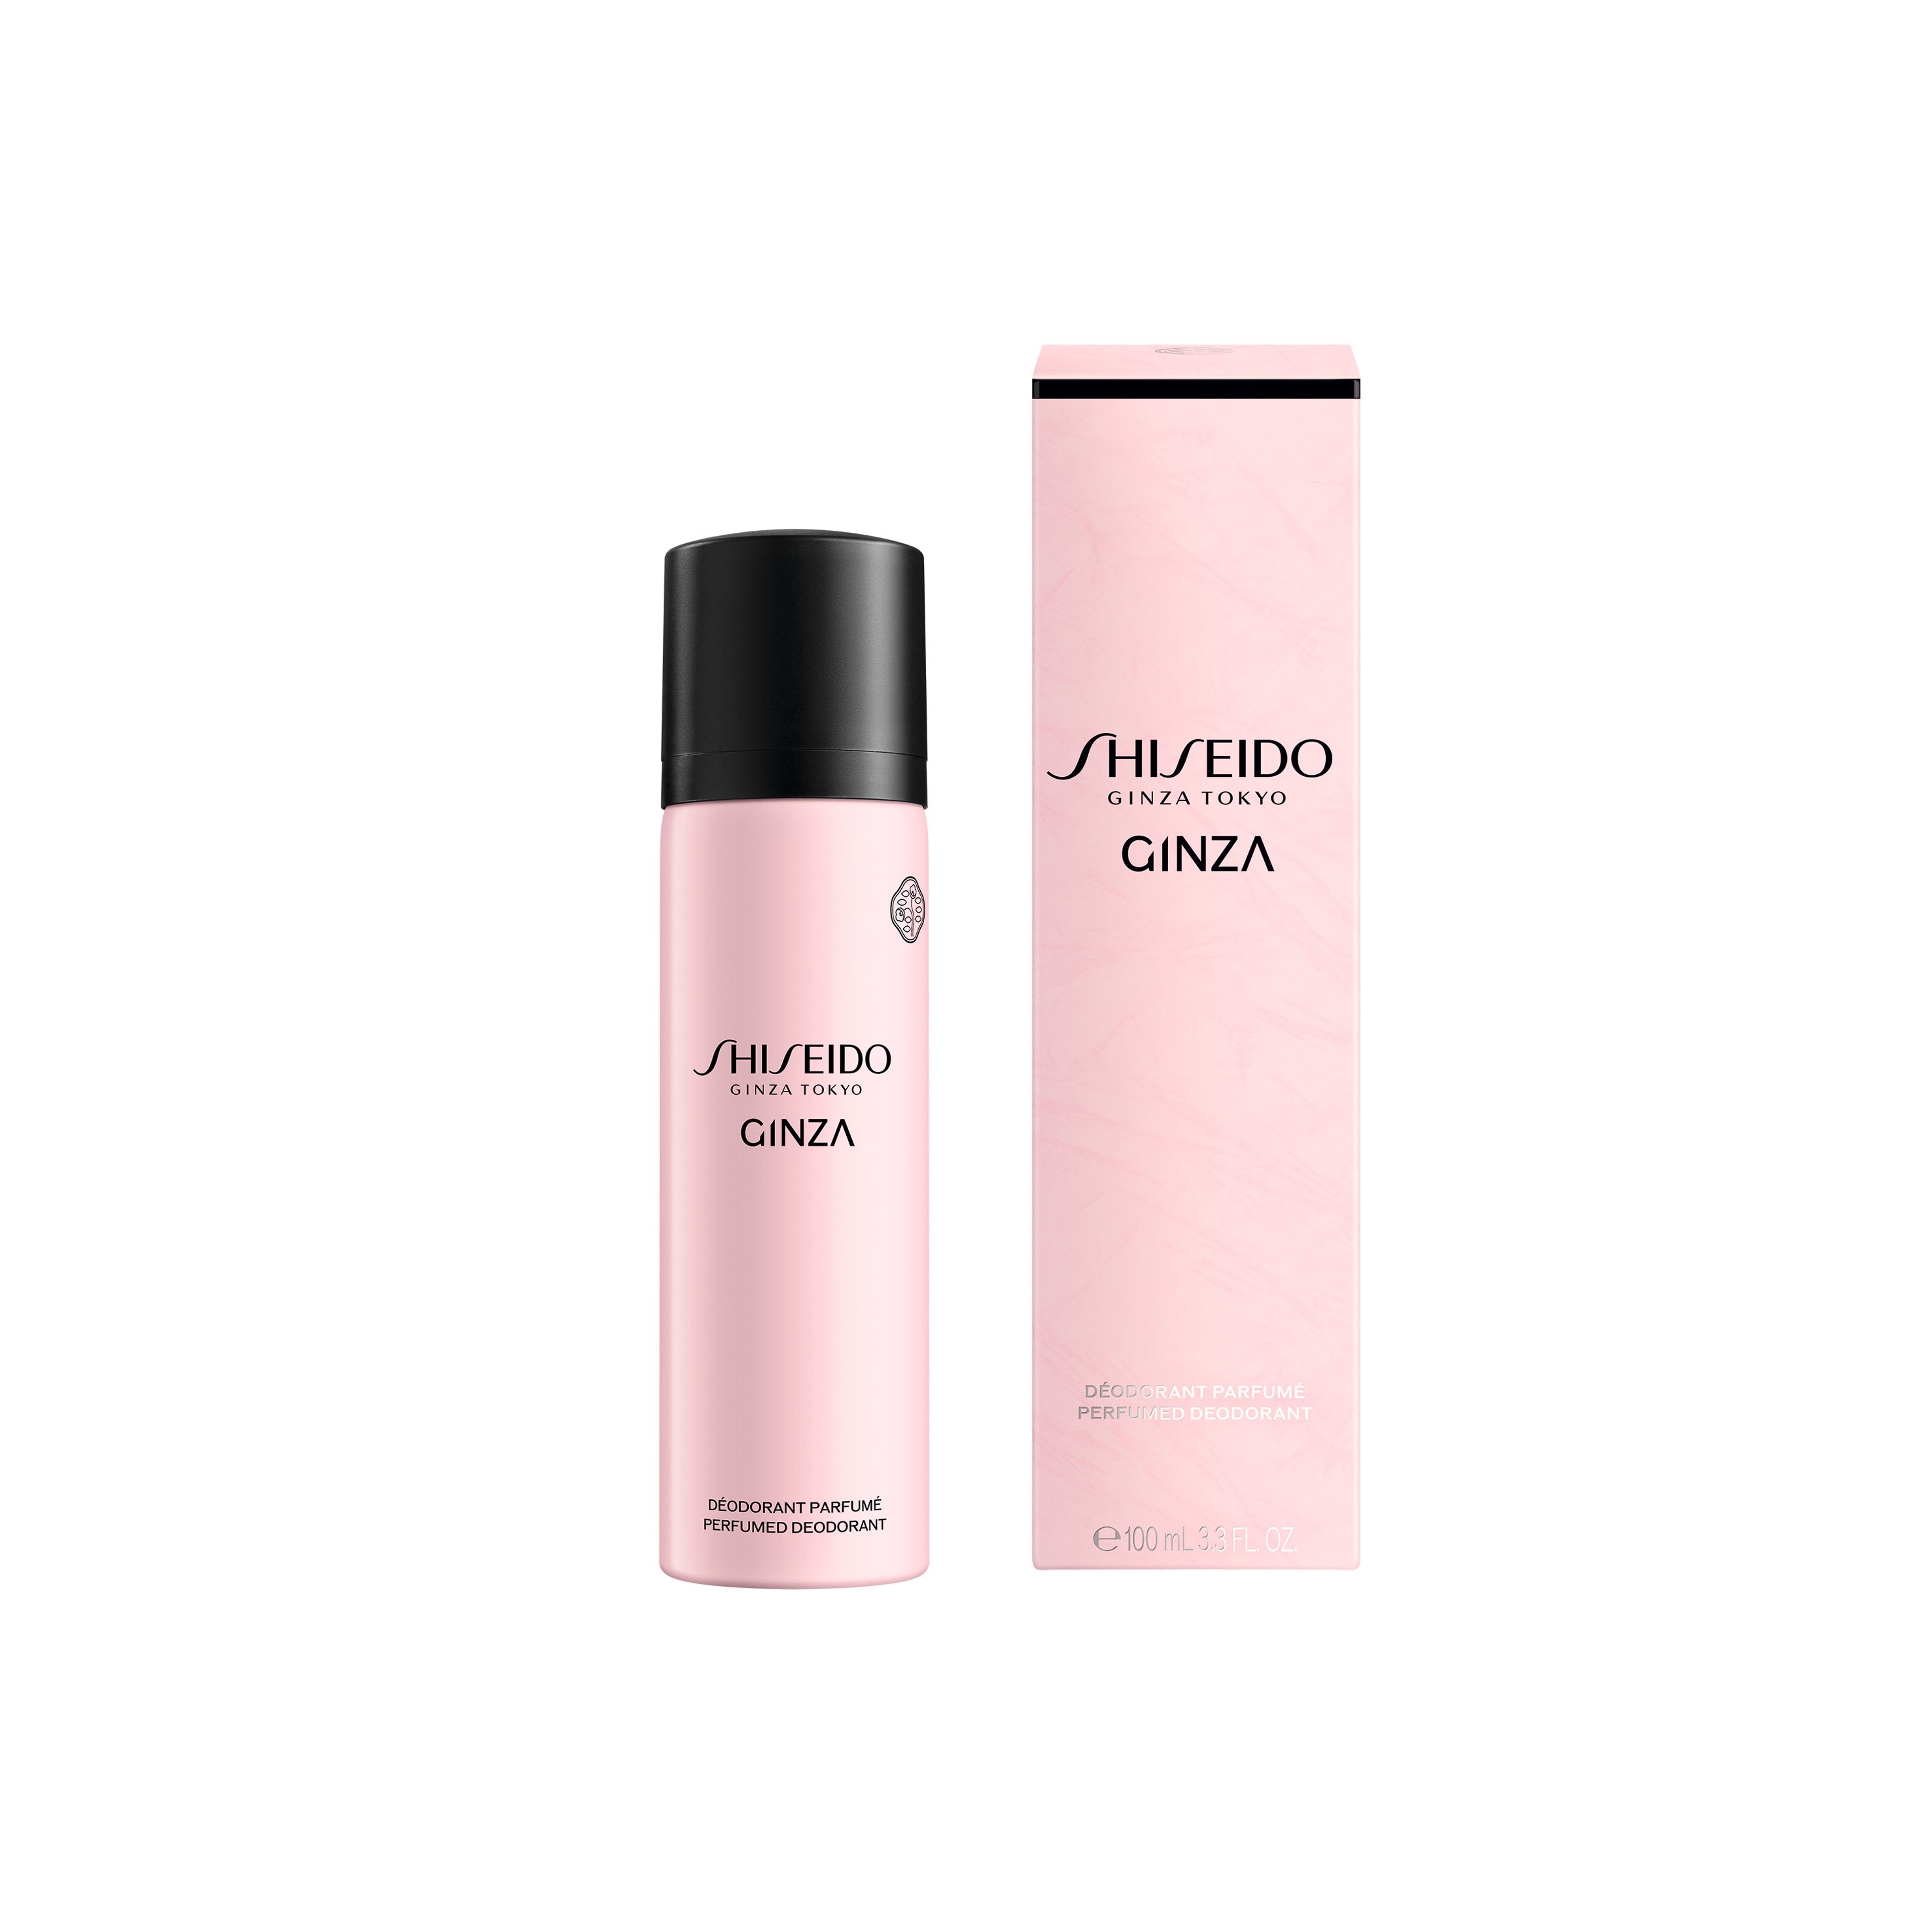 Shiseido Perfumed Deodorant 2